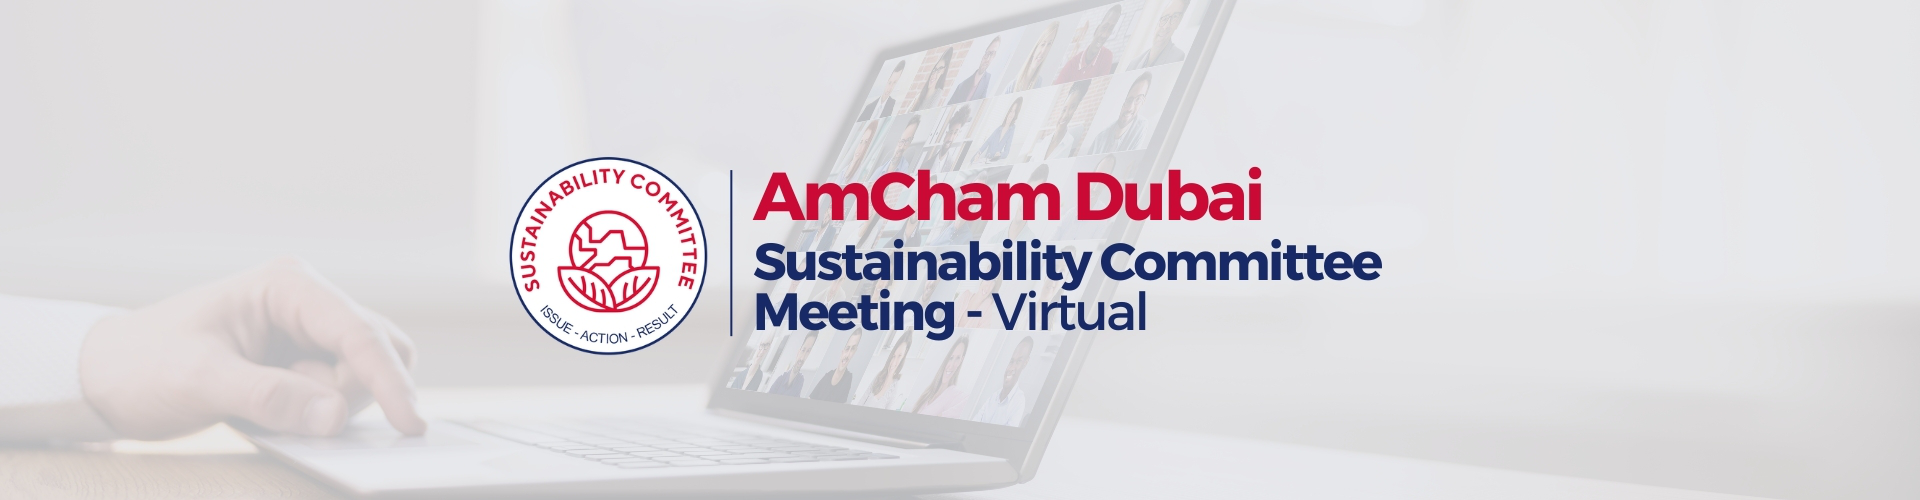 thumbnails AmCham Dubai Sustainability Committee Meeting - Virtual